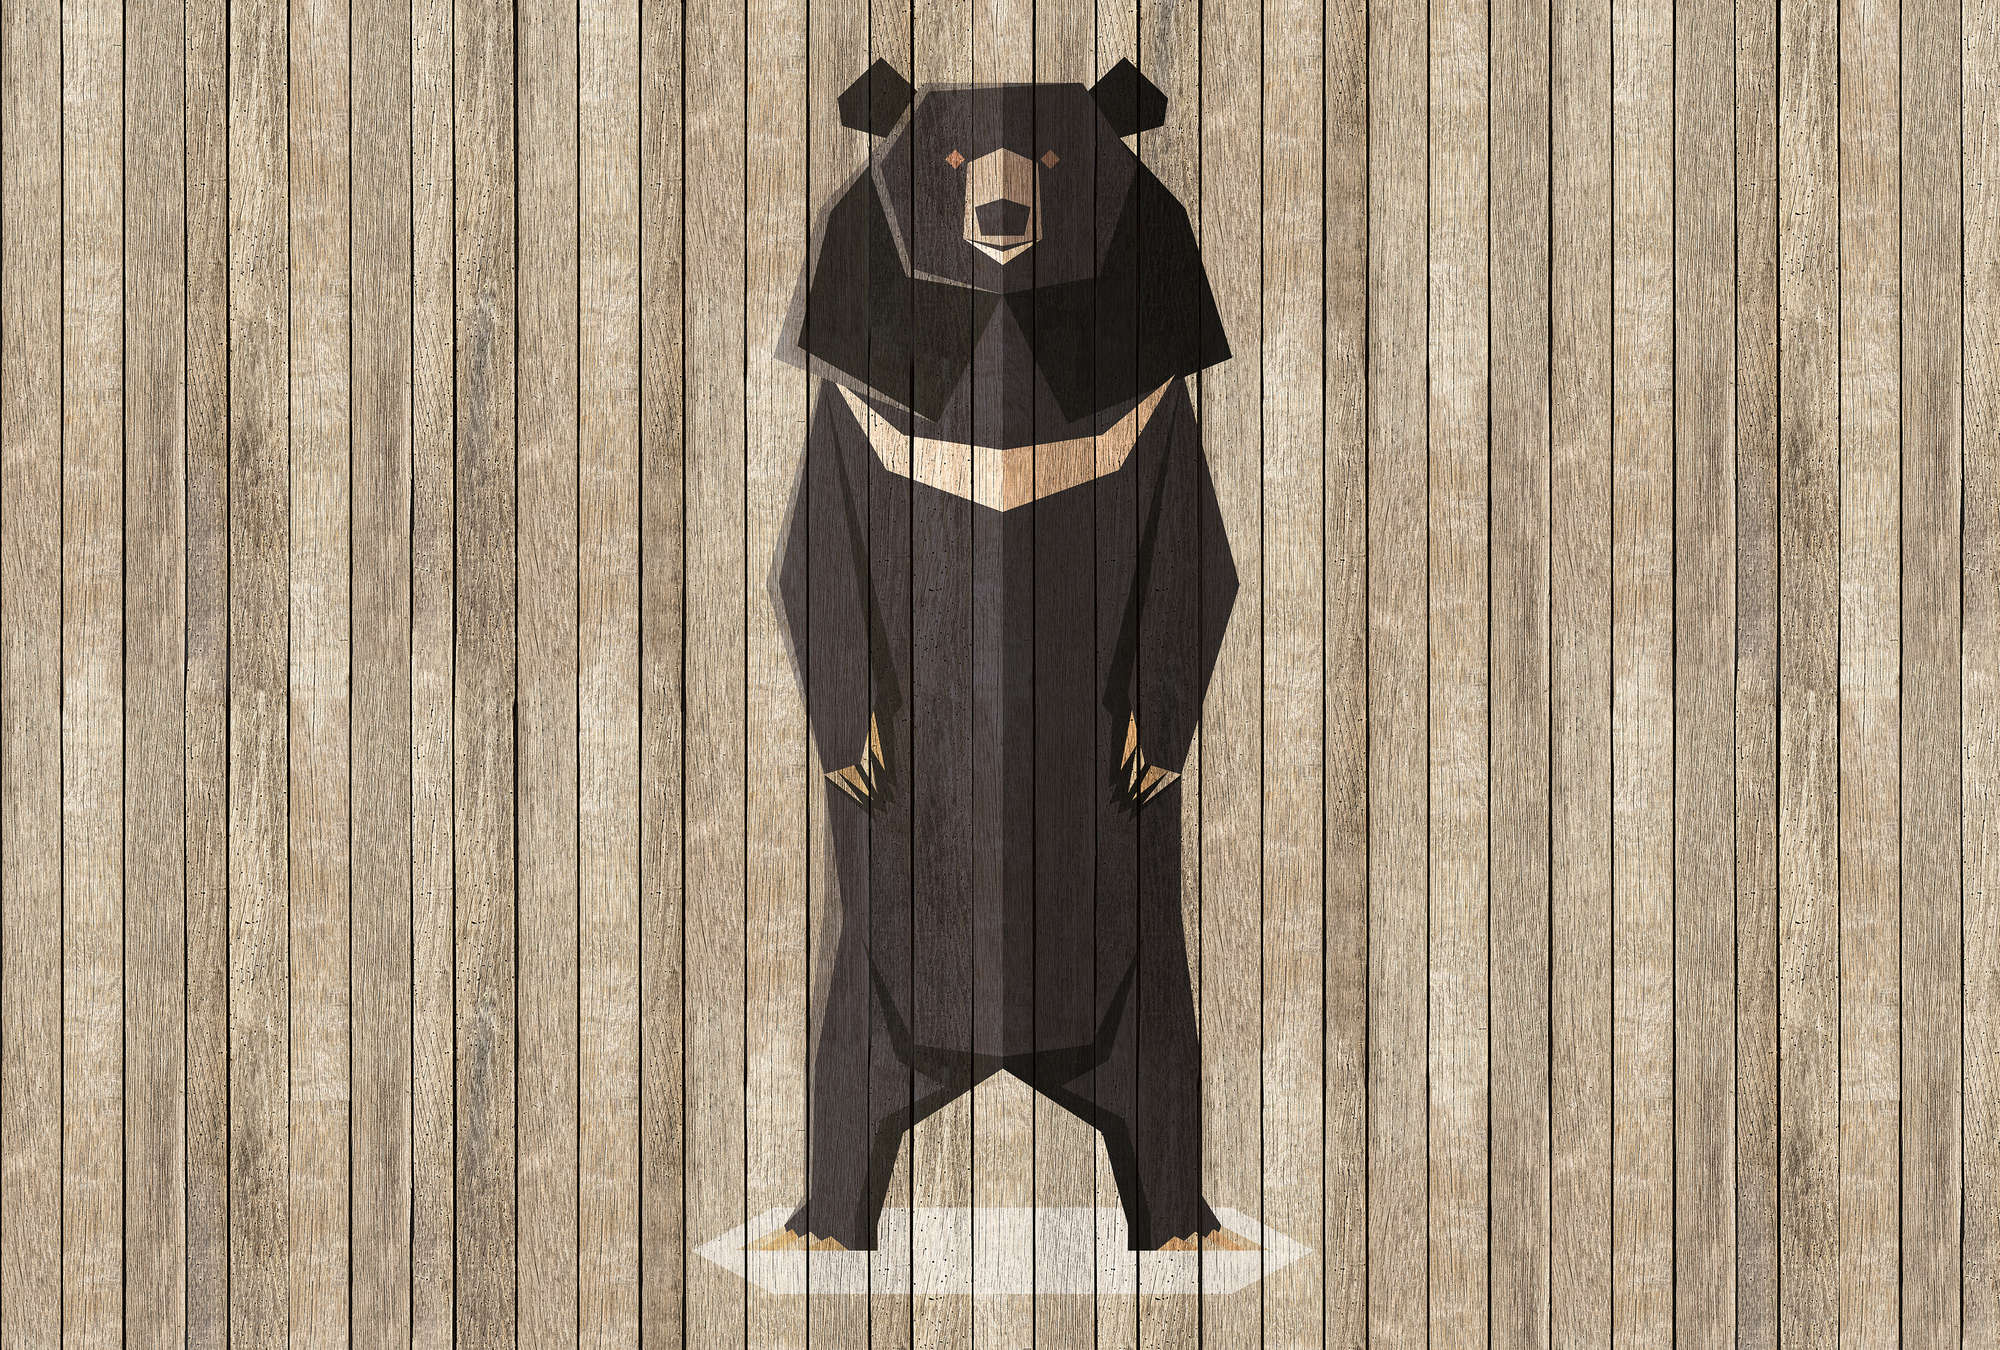             Born to Be Wild 1 - Board Wallpaper with Bears - Wooden Panels Wide - Beige, Brown | Premium Smooth Vliesbehang
        